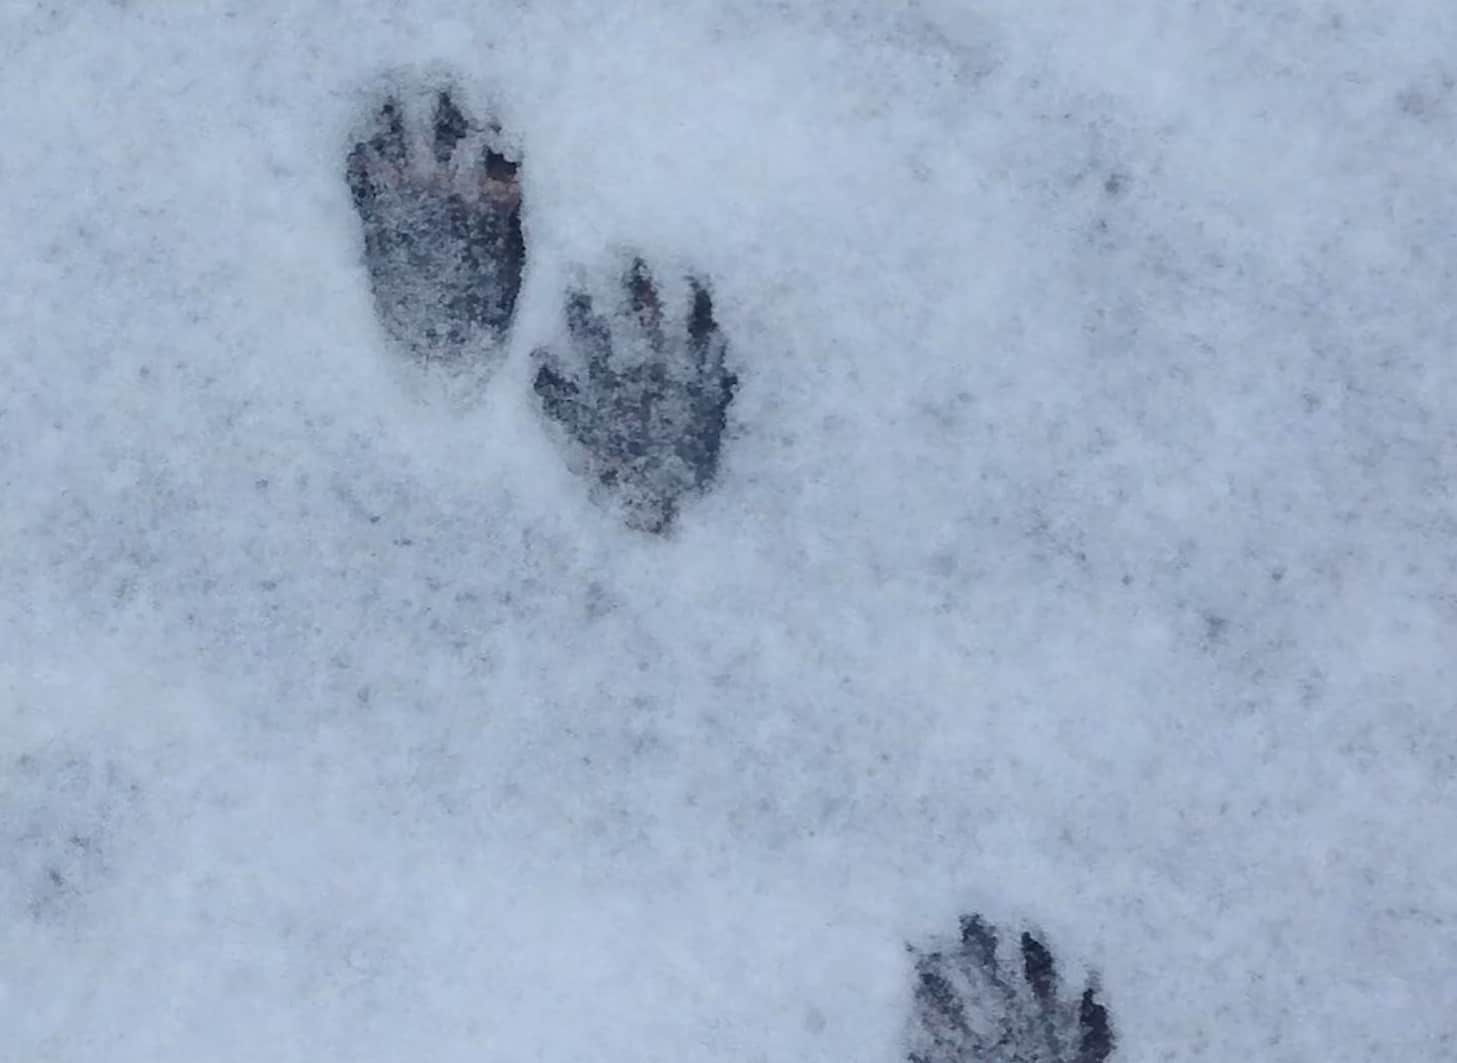 Raccoon tracks in the snow